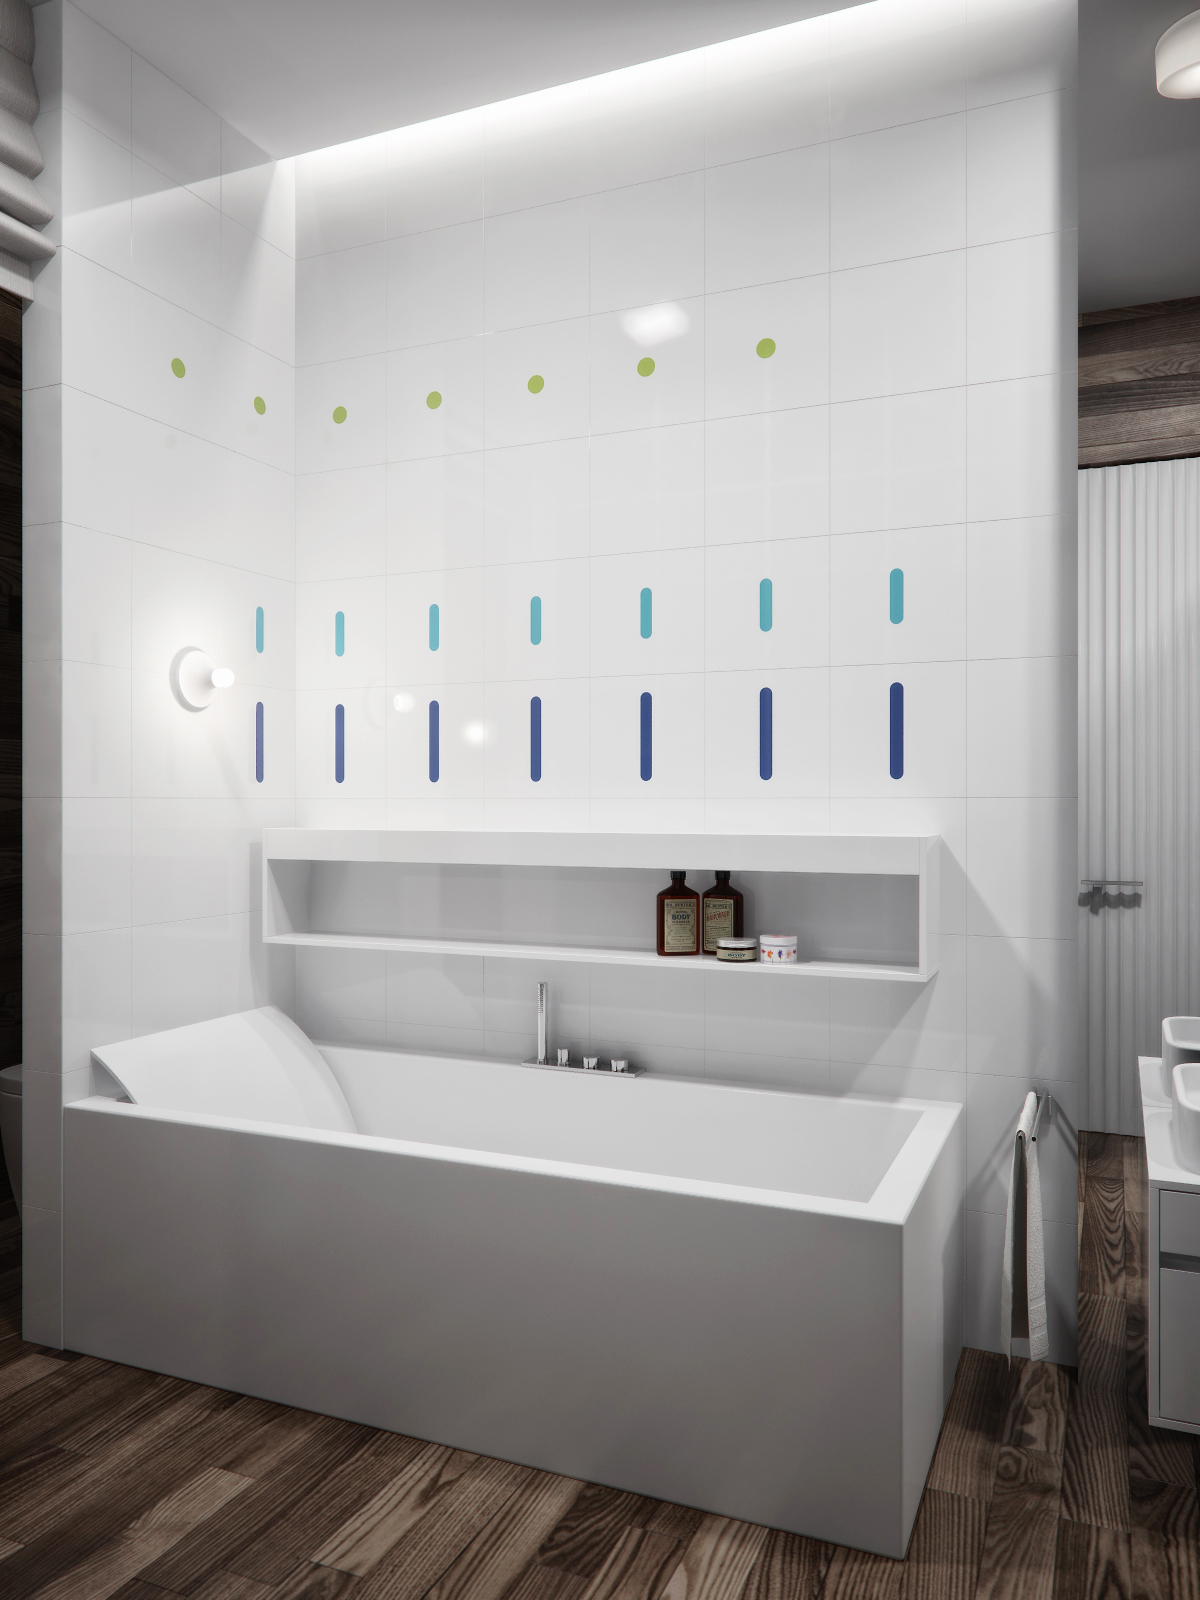 Tile white bathroom design "width =" 1200 "height =" 1600 "srcset =" https://mileray.com/wp-content/uploads/2016/09/Contemporary-white-bathroom-Azovskiy-Pahomova-Architects-1. jpeg 1200w, https://mileray.com/wp-content/uploads/2016/09/Contemporary-white-bathroom-Azovskiy-Pahomova-Architects-1-225x300.jpeg 225w, https://mileray.com/wp- Content / Uploads / 2016/09 / Contemporary-white-bathroom-Azovskiy-Pahomova-Architects-1-768x1024.jpeg 768w, https://mileray.com/wp-content/uploads/2016/09/Contemporary-white-bathroom -Azovskiy-Pahomova-Architects-1-696x928.jpeg 696w, https://mileray.com/wp-content/uploads/2016/09/Contemporary-white-bathroom-Azovskiy-Pahomova-Architects-1-1068x1424.jpeg 1068w , https://mileray.com/wp-content/uploads/2016/09/Contemporary-white-bathroom-Azovskiy-Pahomova-Architects-1-315x420.jpeg 315w "Sizes =" (maximum width: 1200px) 100vw, 1200px